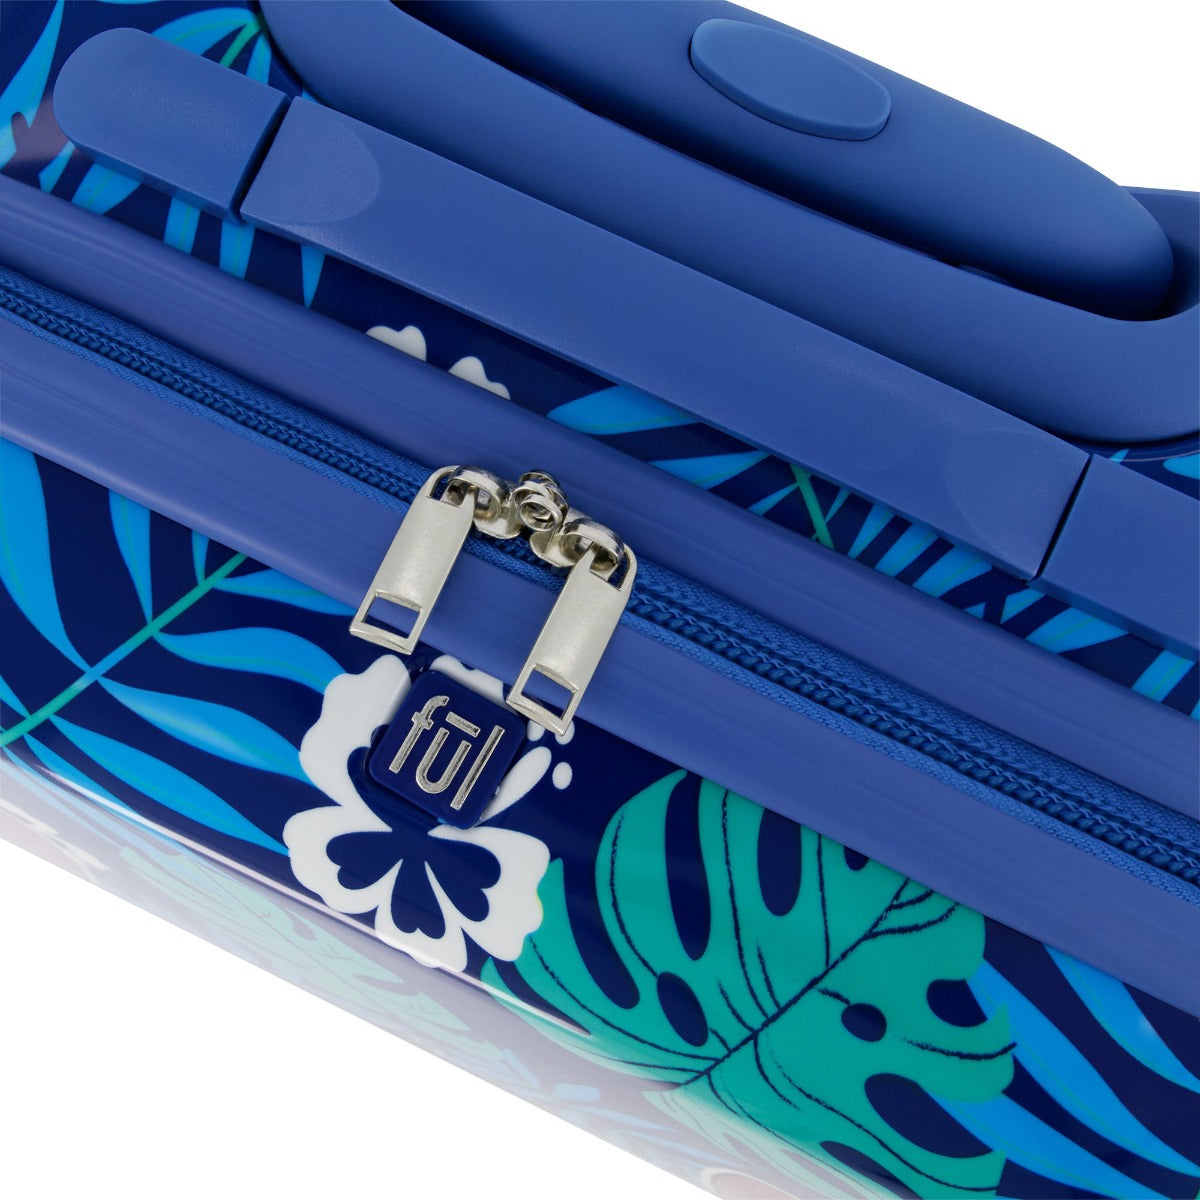 Blue Disney Ful Stitch tropical leaves 21" hardshell luggage for kids travel